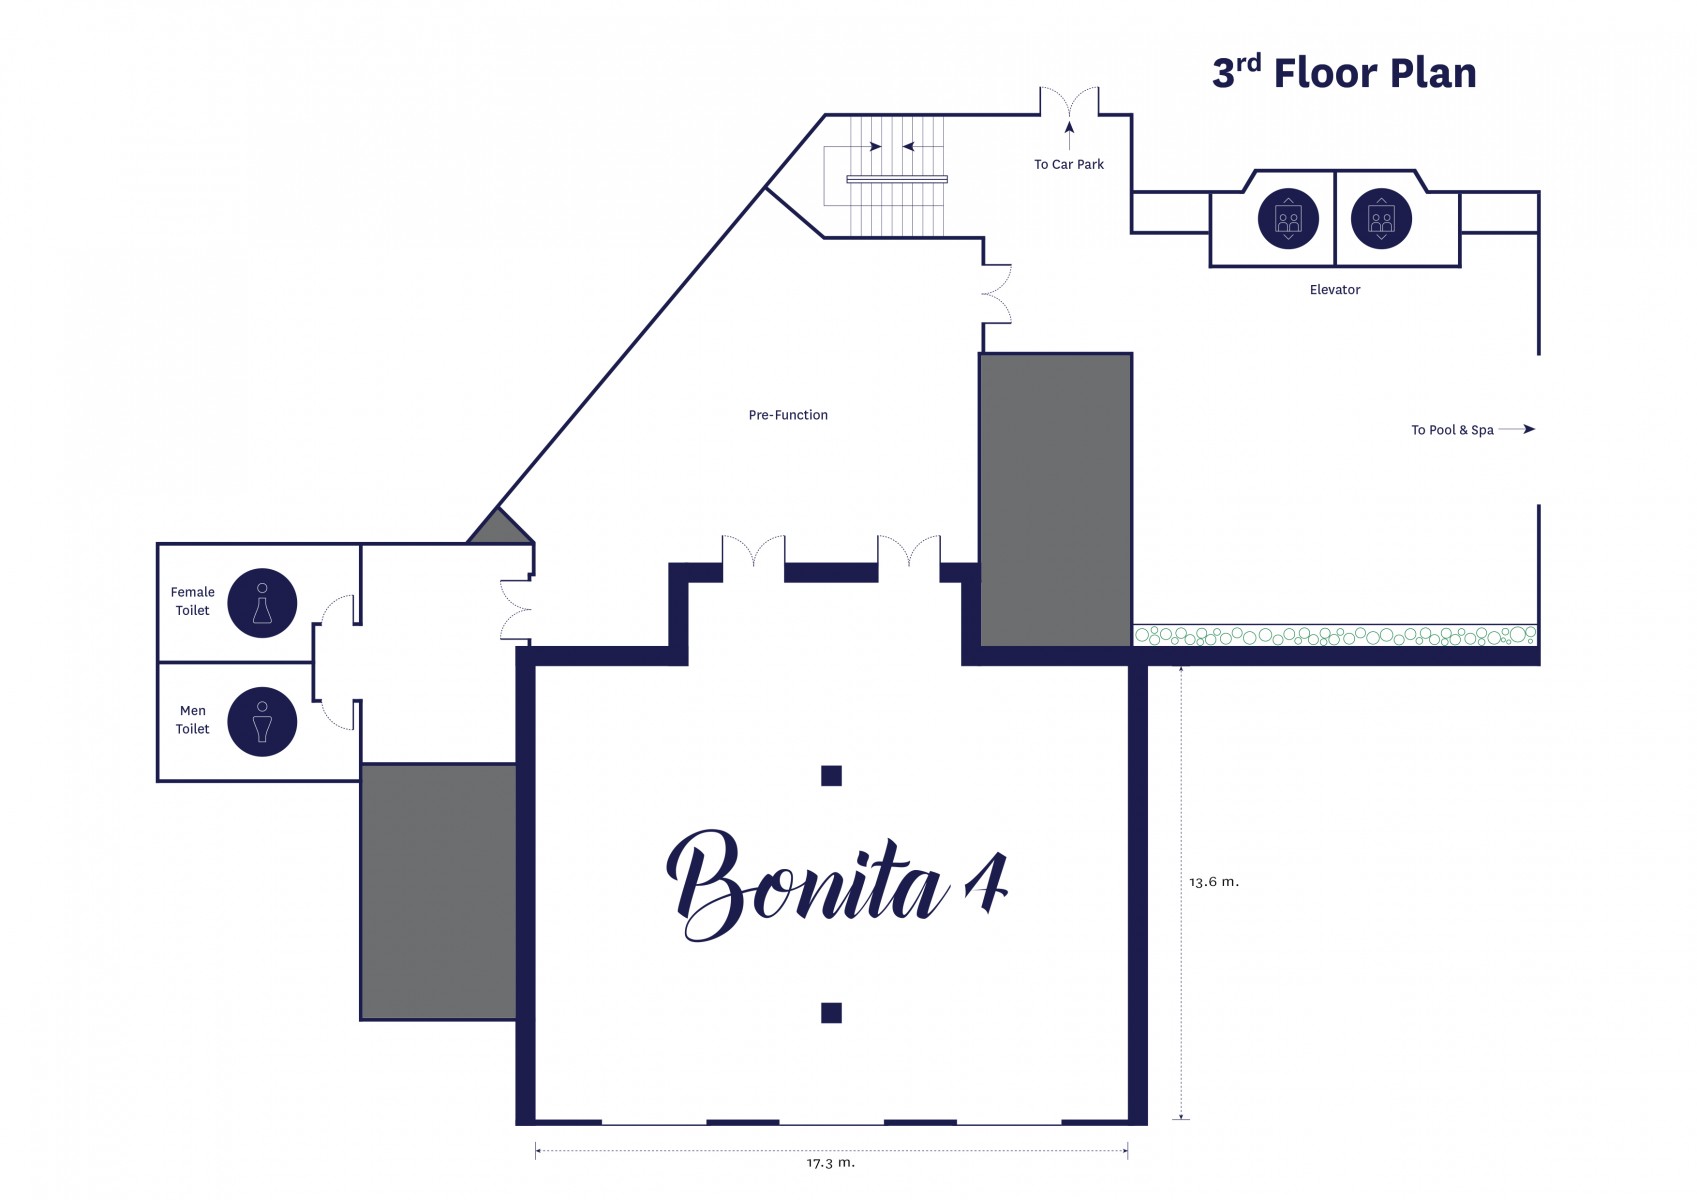 Bonita 4 meeting room - 3rd floor layout plan